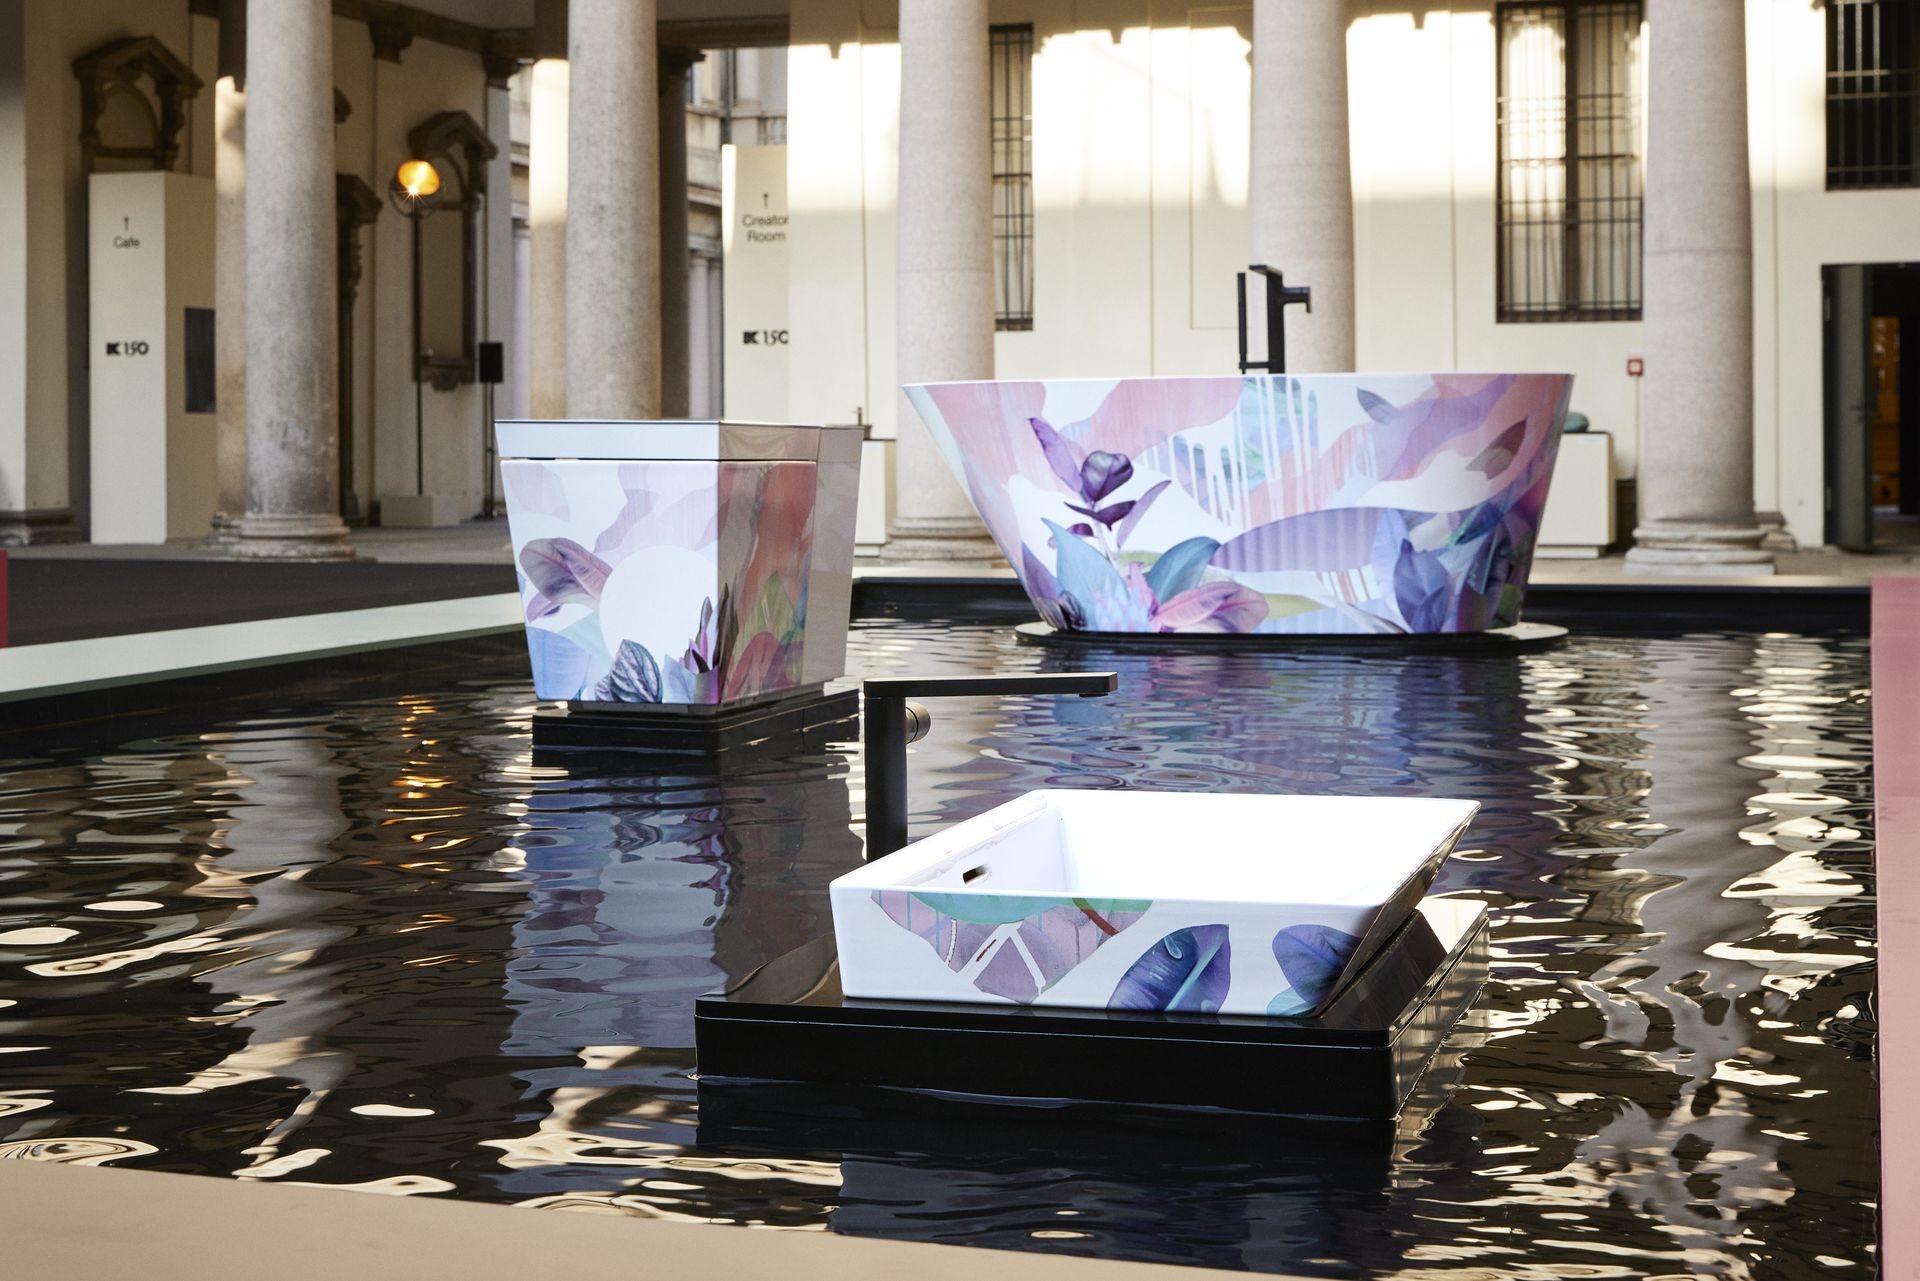 Kohler brought art and colour to bathroom design at Milan Design Week